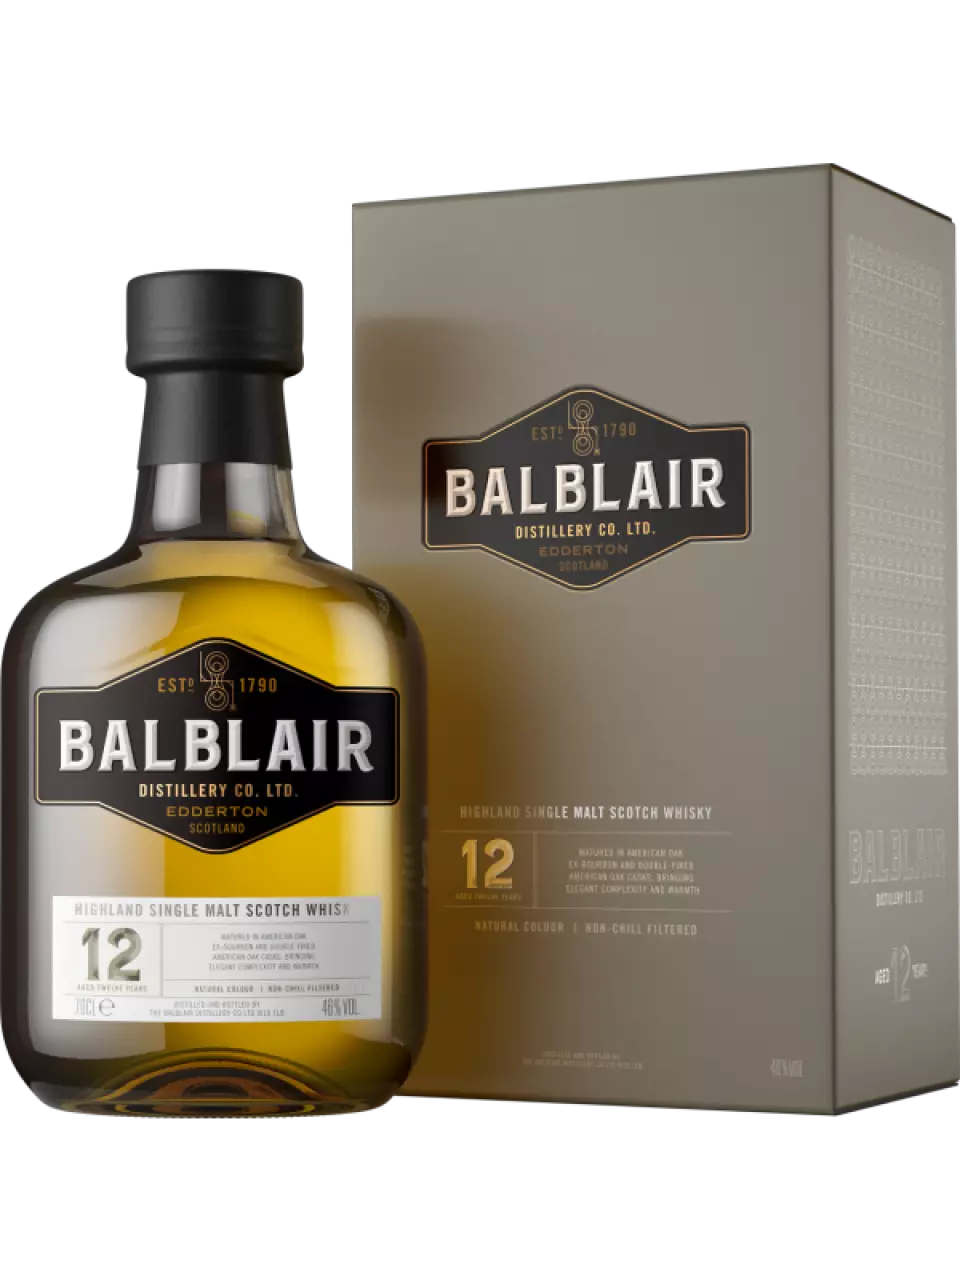 Balblair 12 Year Old The Balblair Collection whisky listing